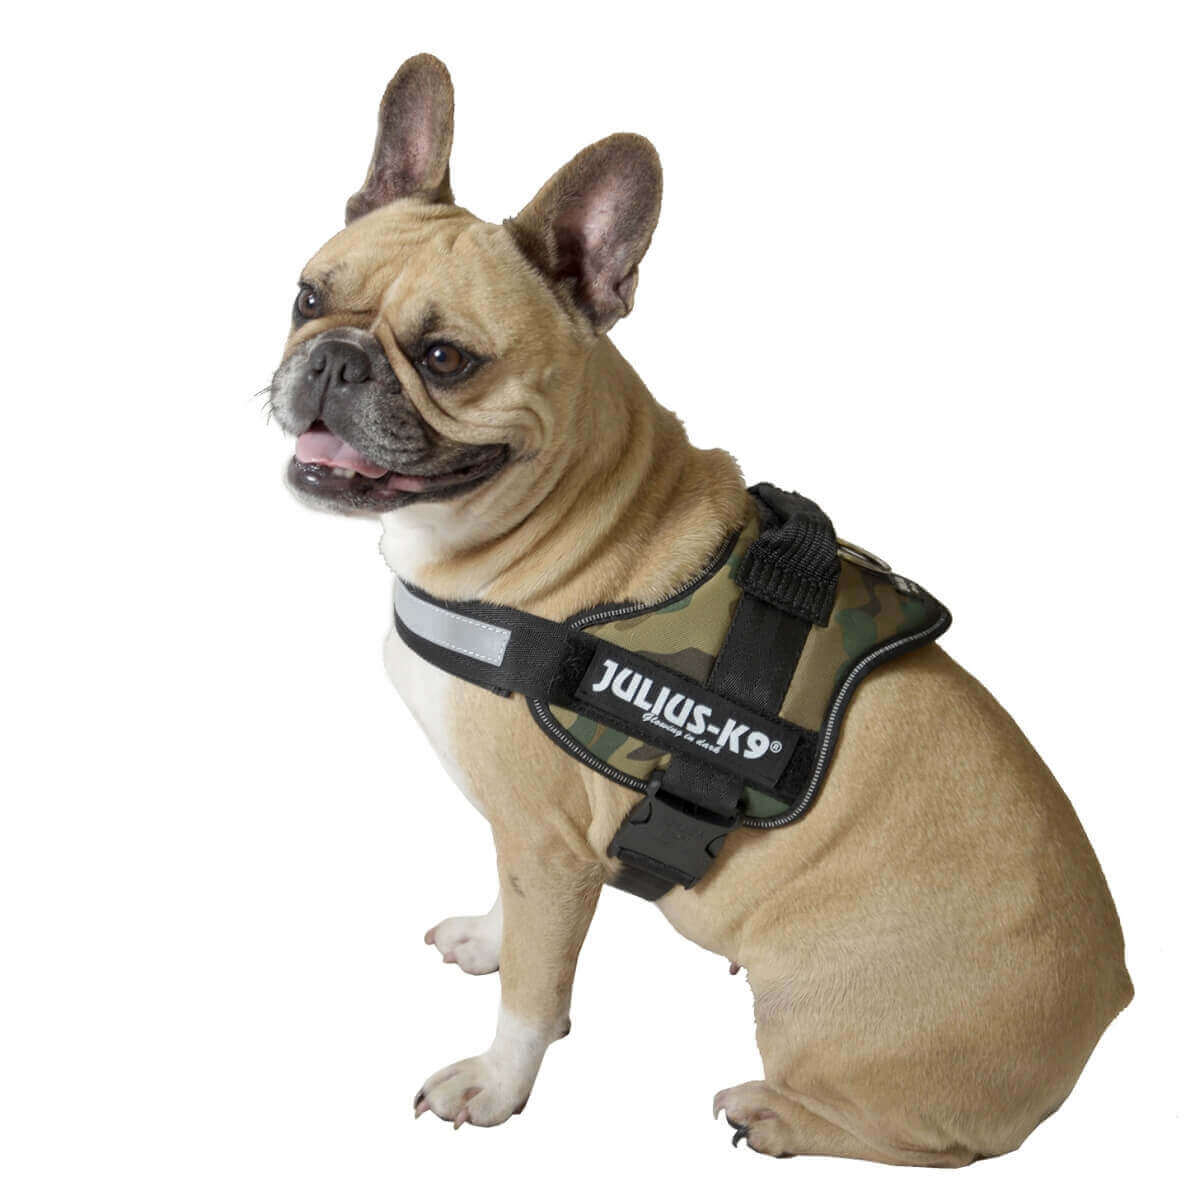 Harnais militaire en tissu pour chien, Julius K9, BisBis